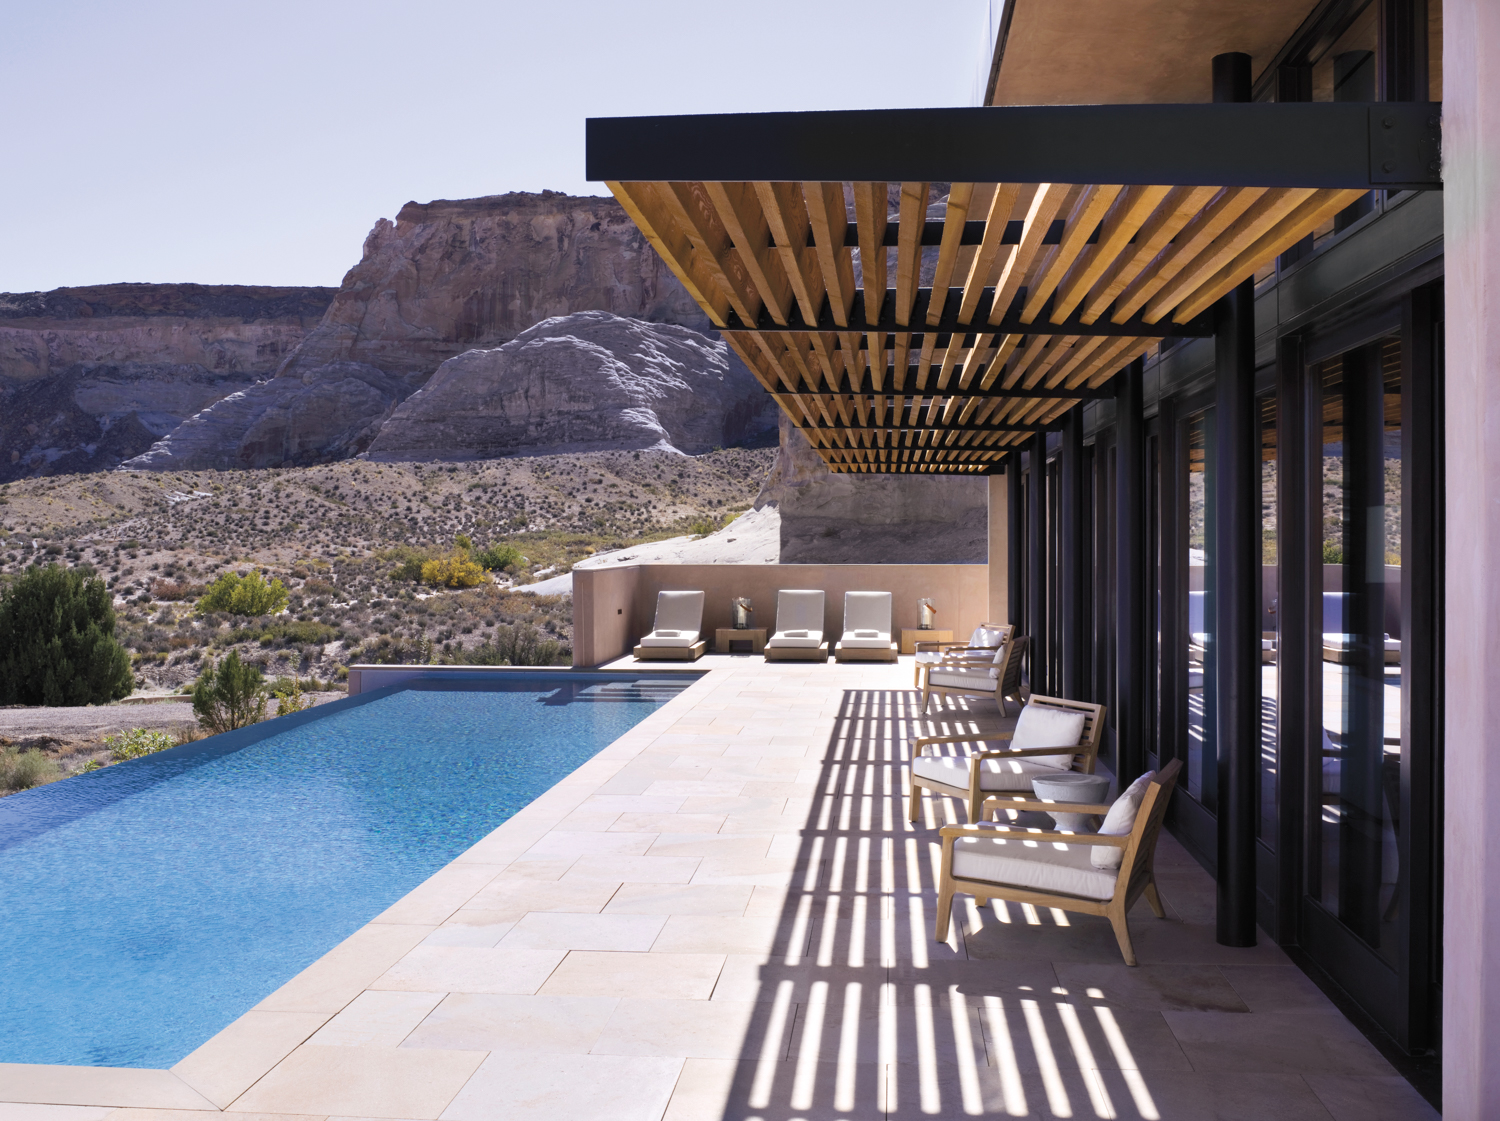 Hotel pool overlooking a mountainous desert landscape.